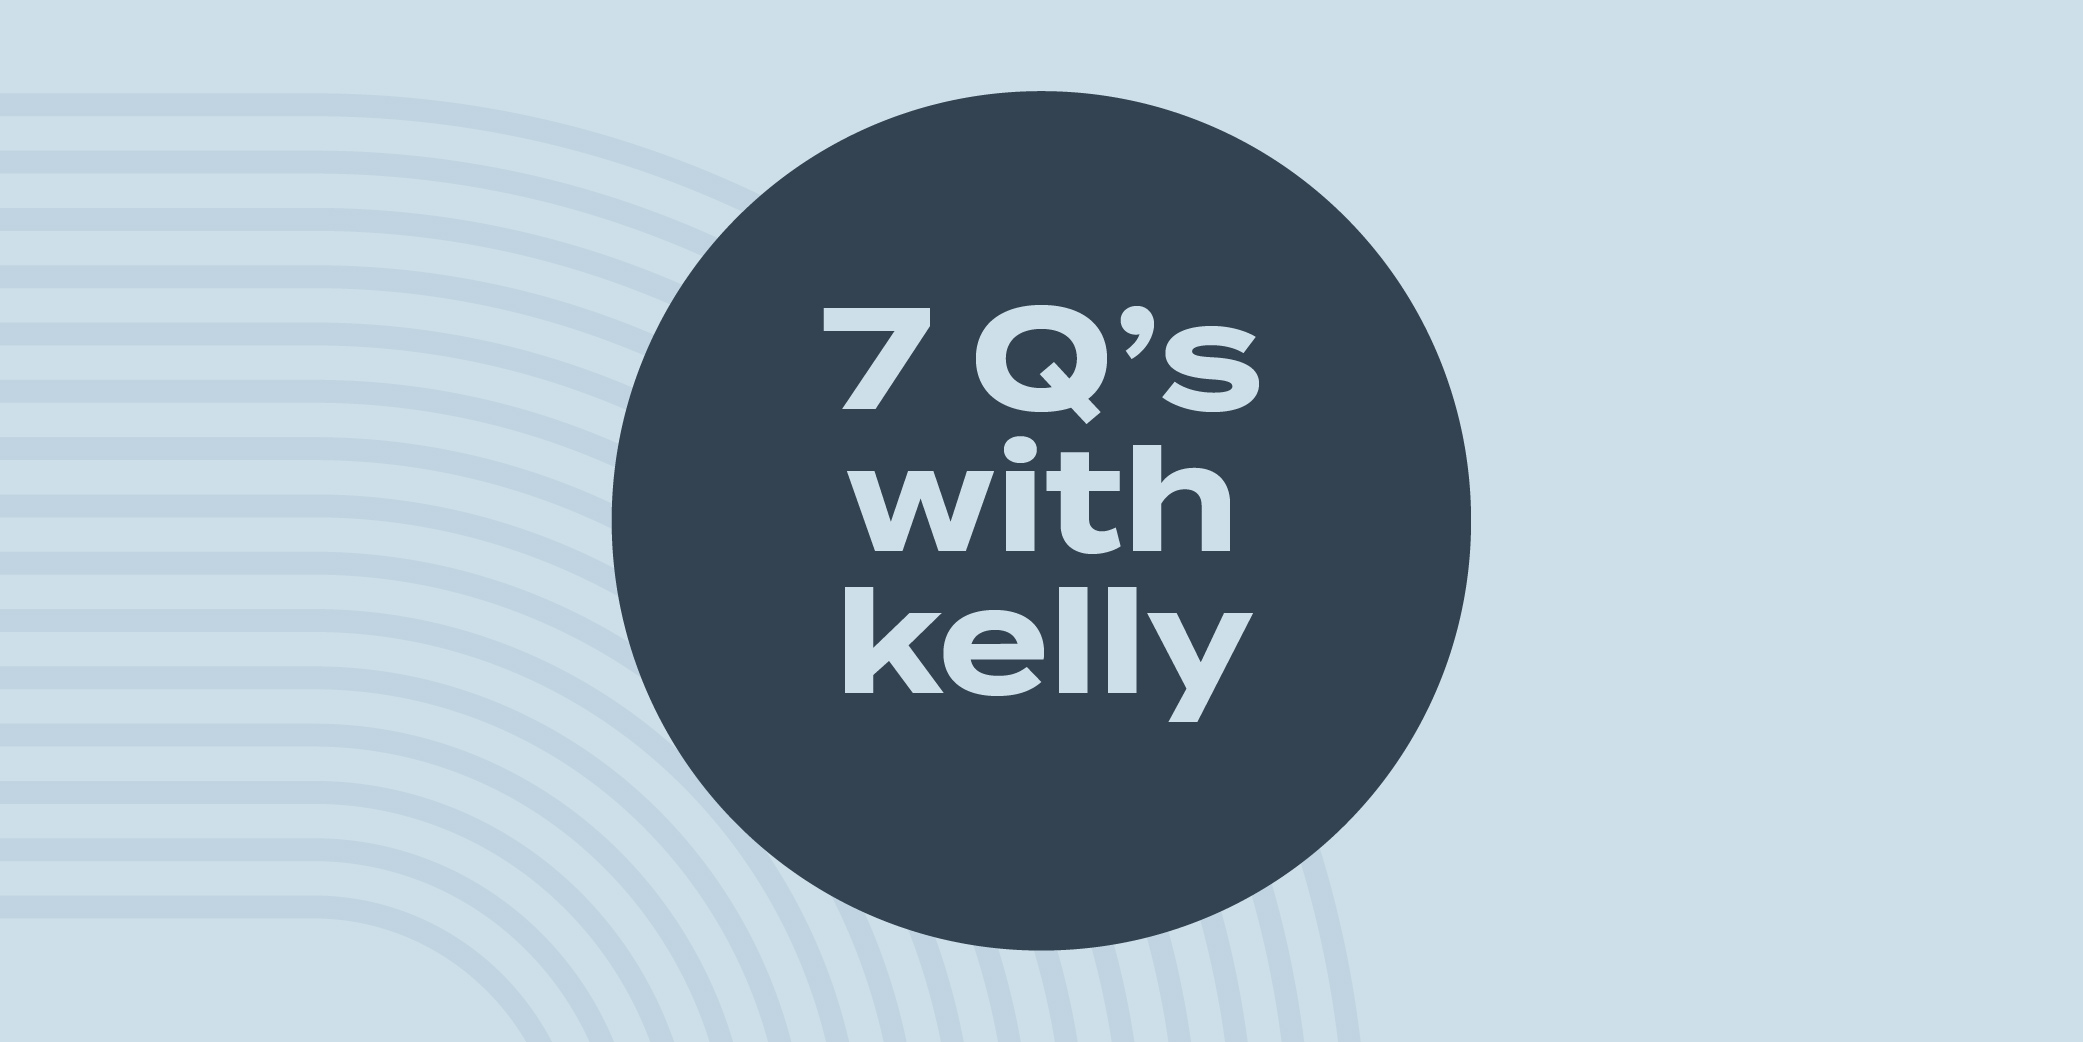 Kelly 7 Qs